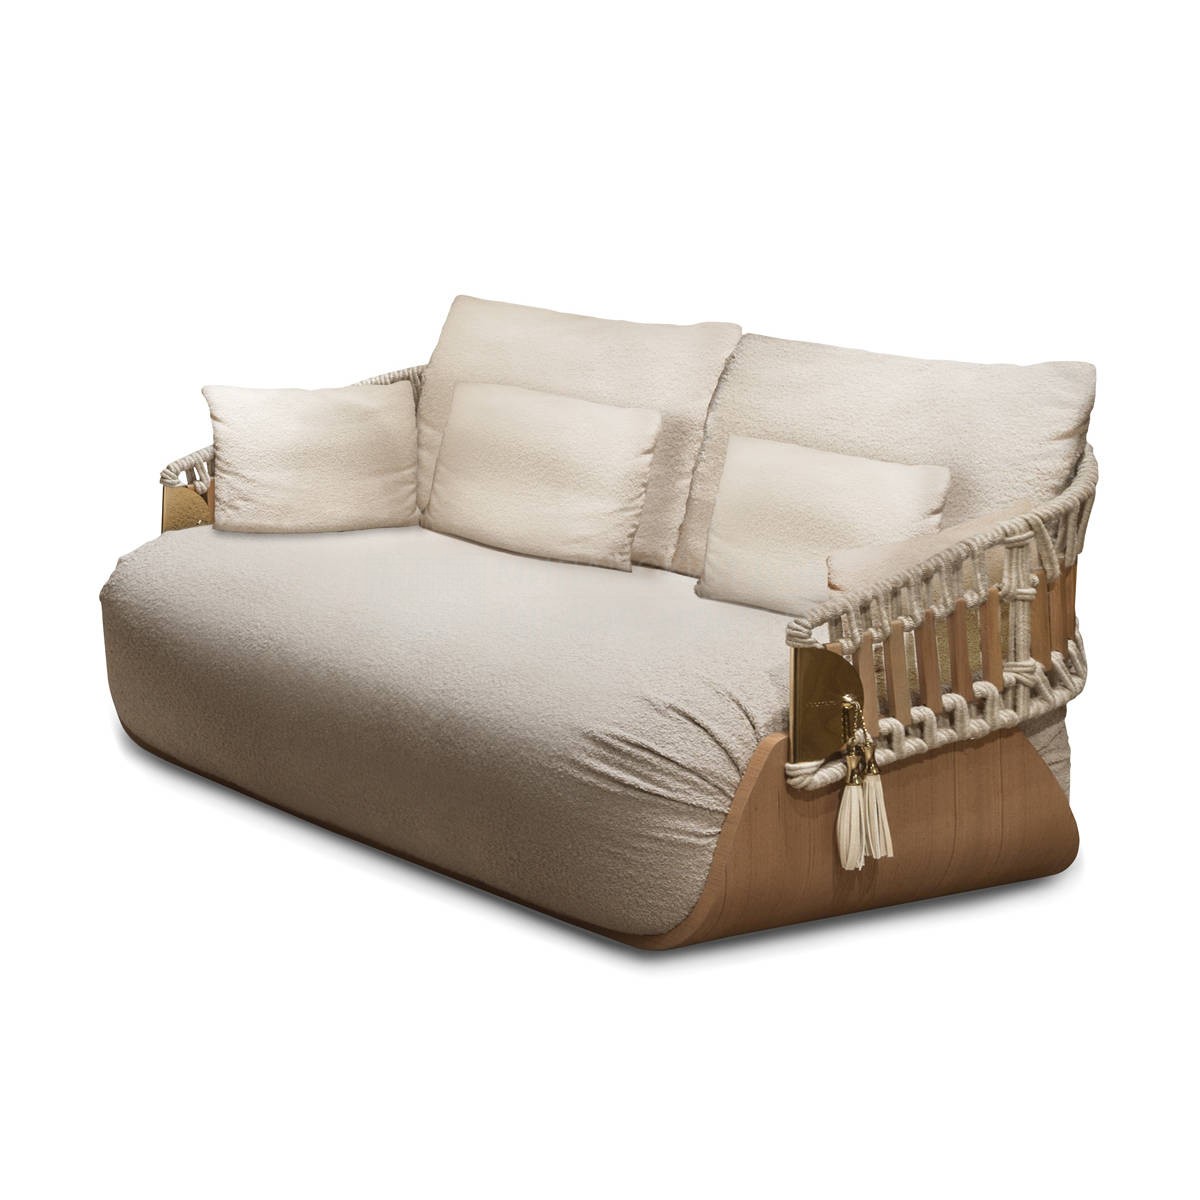 Прямой диван Kathryn sofa из Италии фабрики IPE CAVALLI VISIONNAIRE